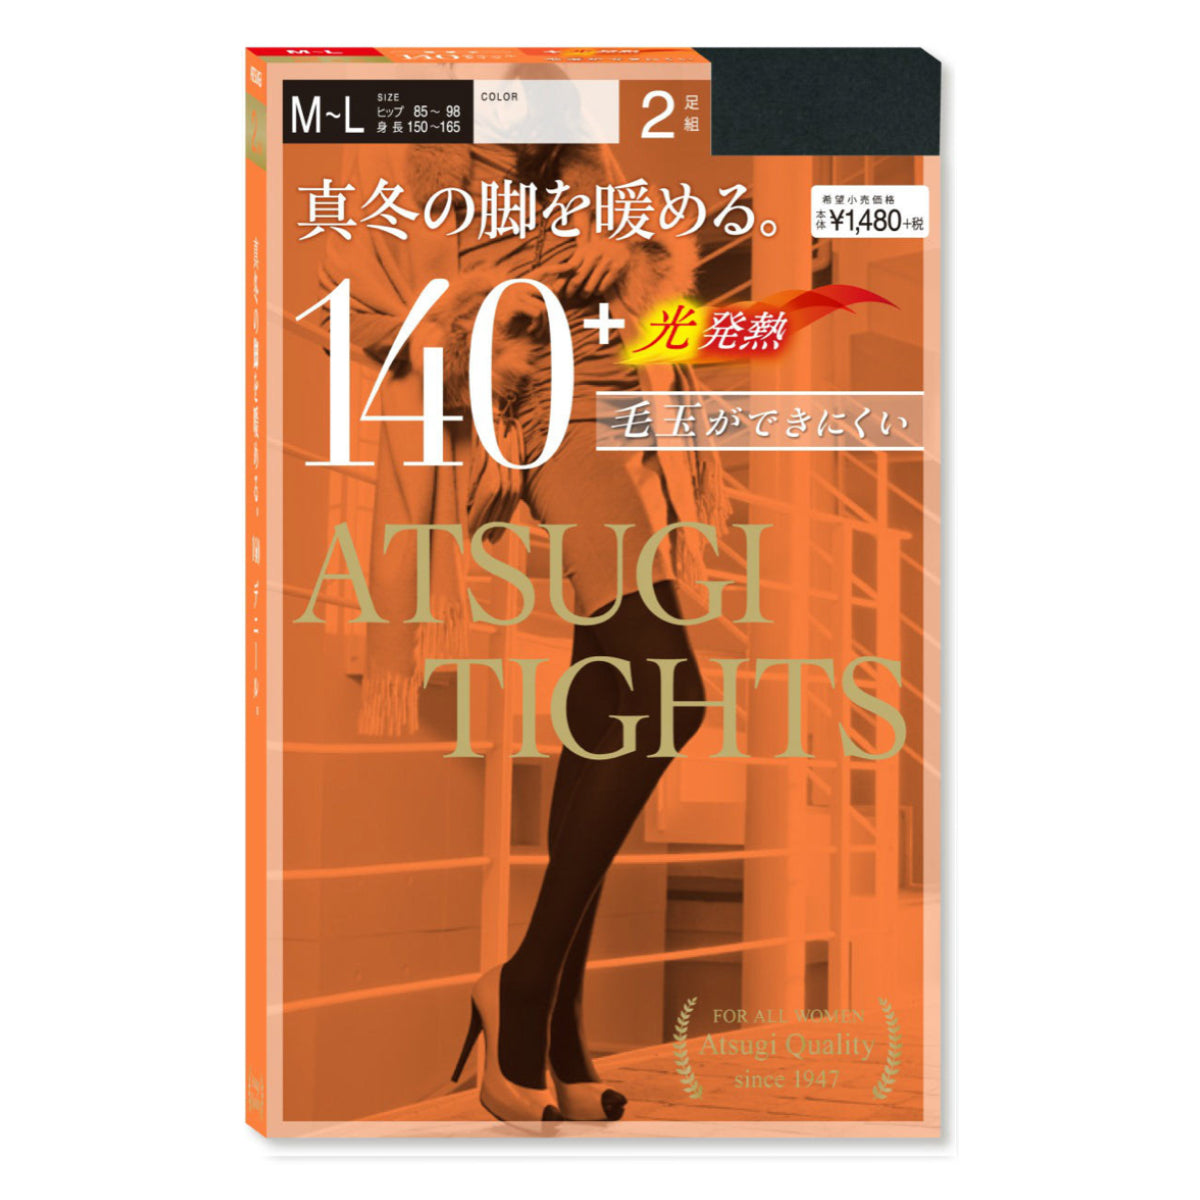 Atsugi Tights 140D 厚木发热超暖瘦腿连裤袜140丹 2款尺码可选